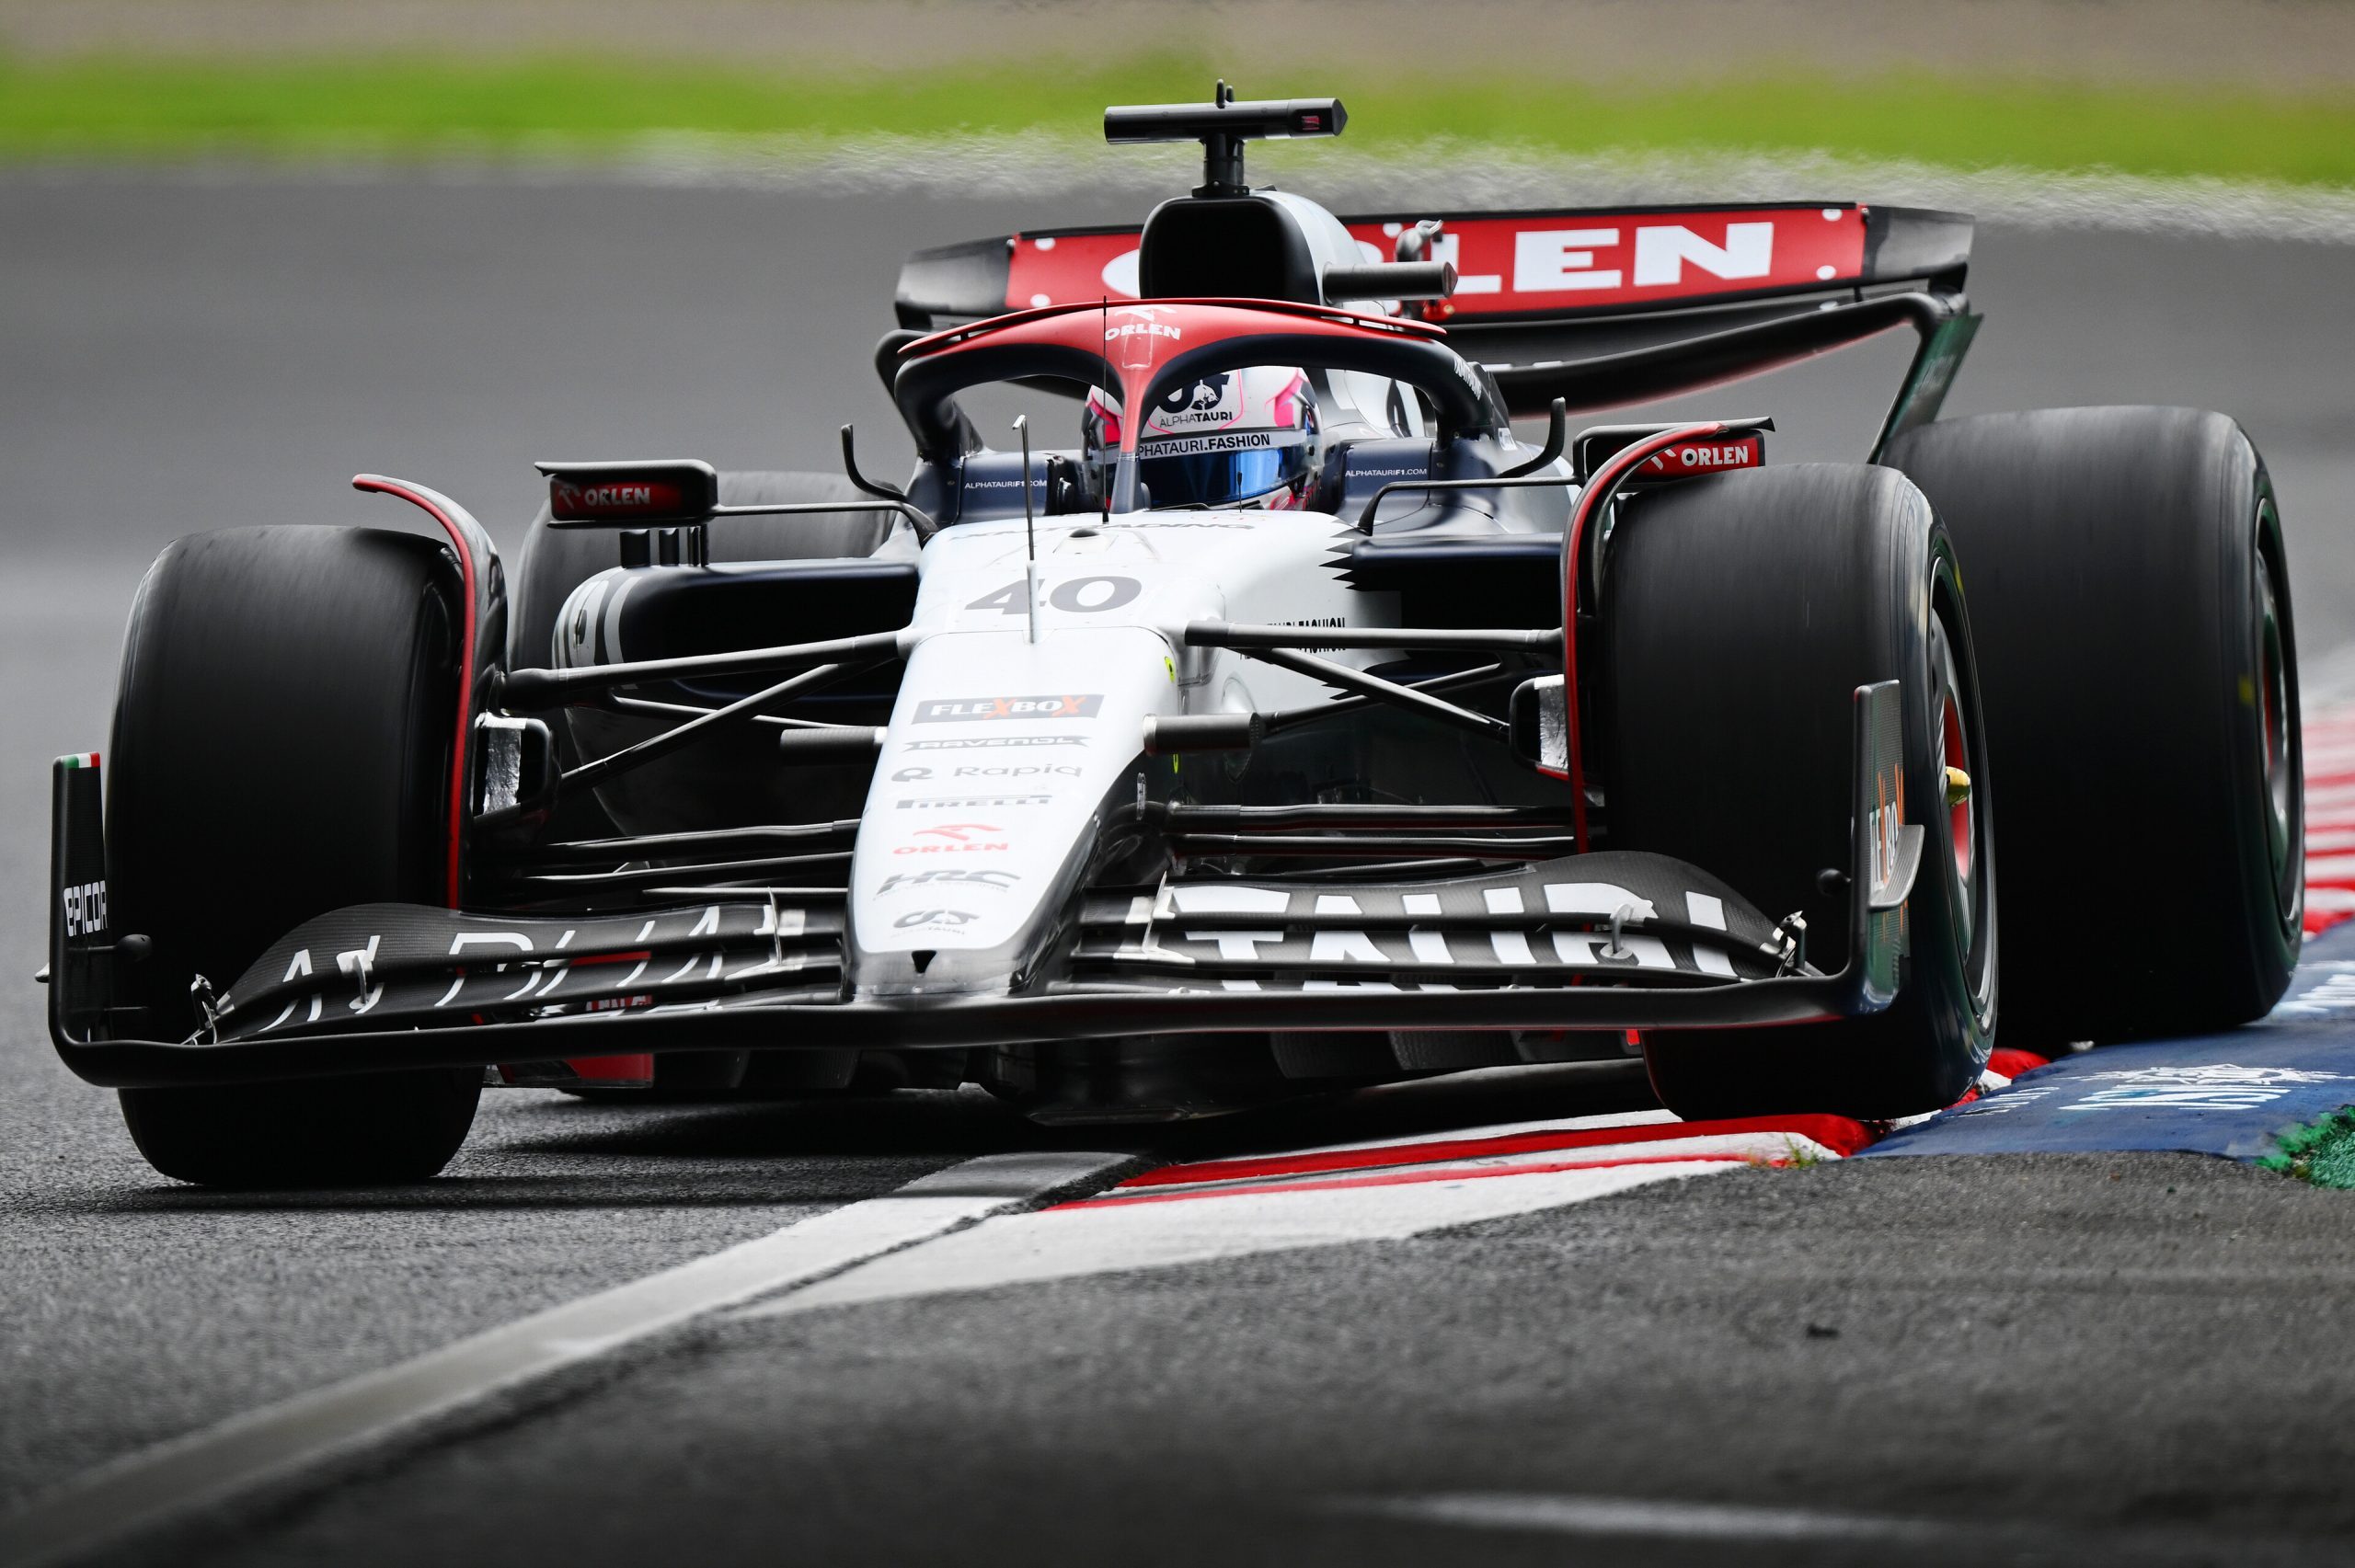 Lawson ninth quickest in Japanese Grand Prix FP1 - VelocityNews